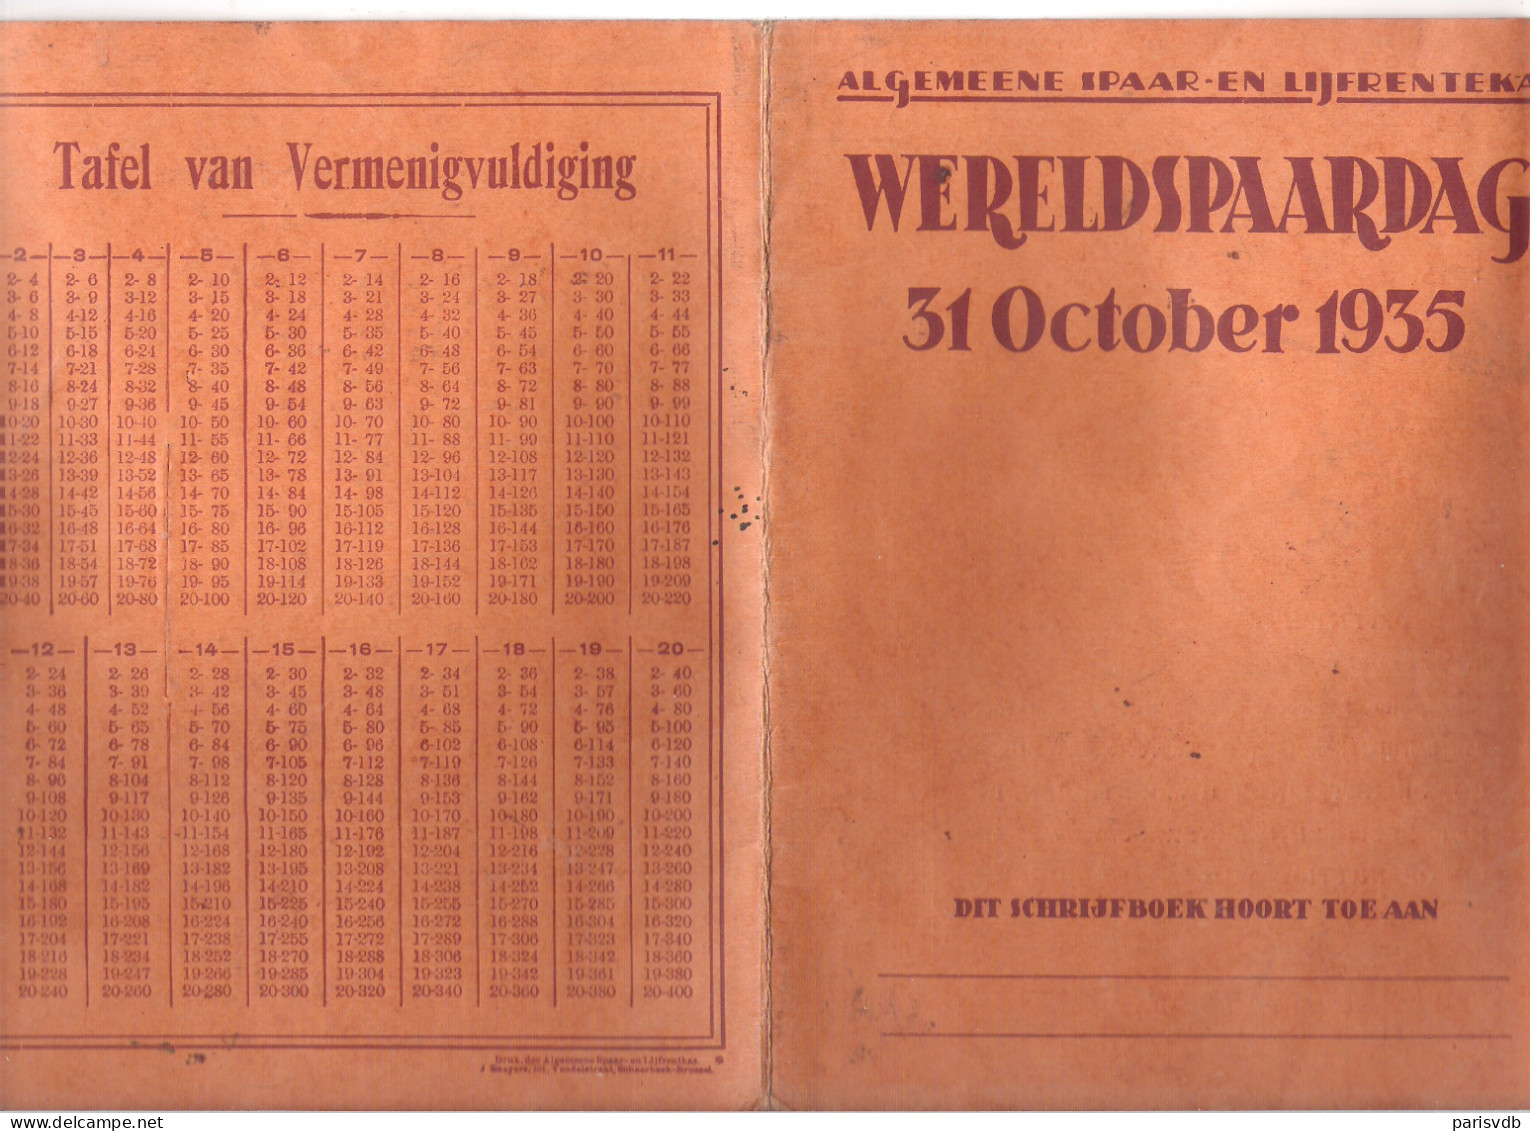 ALGEMEENE SPAAR- EN LIJFRENTEKAS - WERELDSPAARDAG 31 OCOTBER 1935 - OMSLAG SCHRIJFBOEK   (OD 425) - Banco & Caja De Ahorros